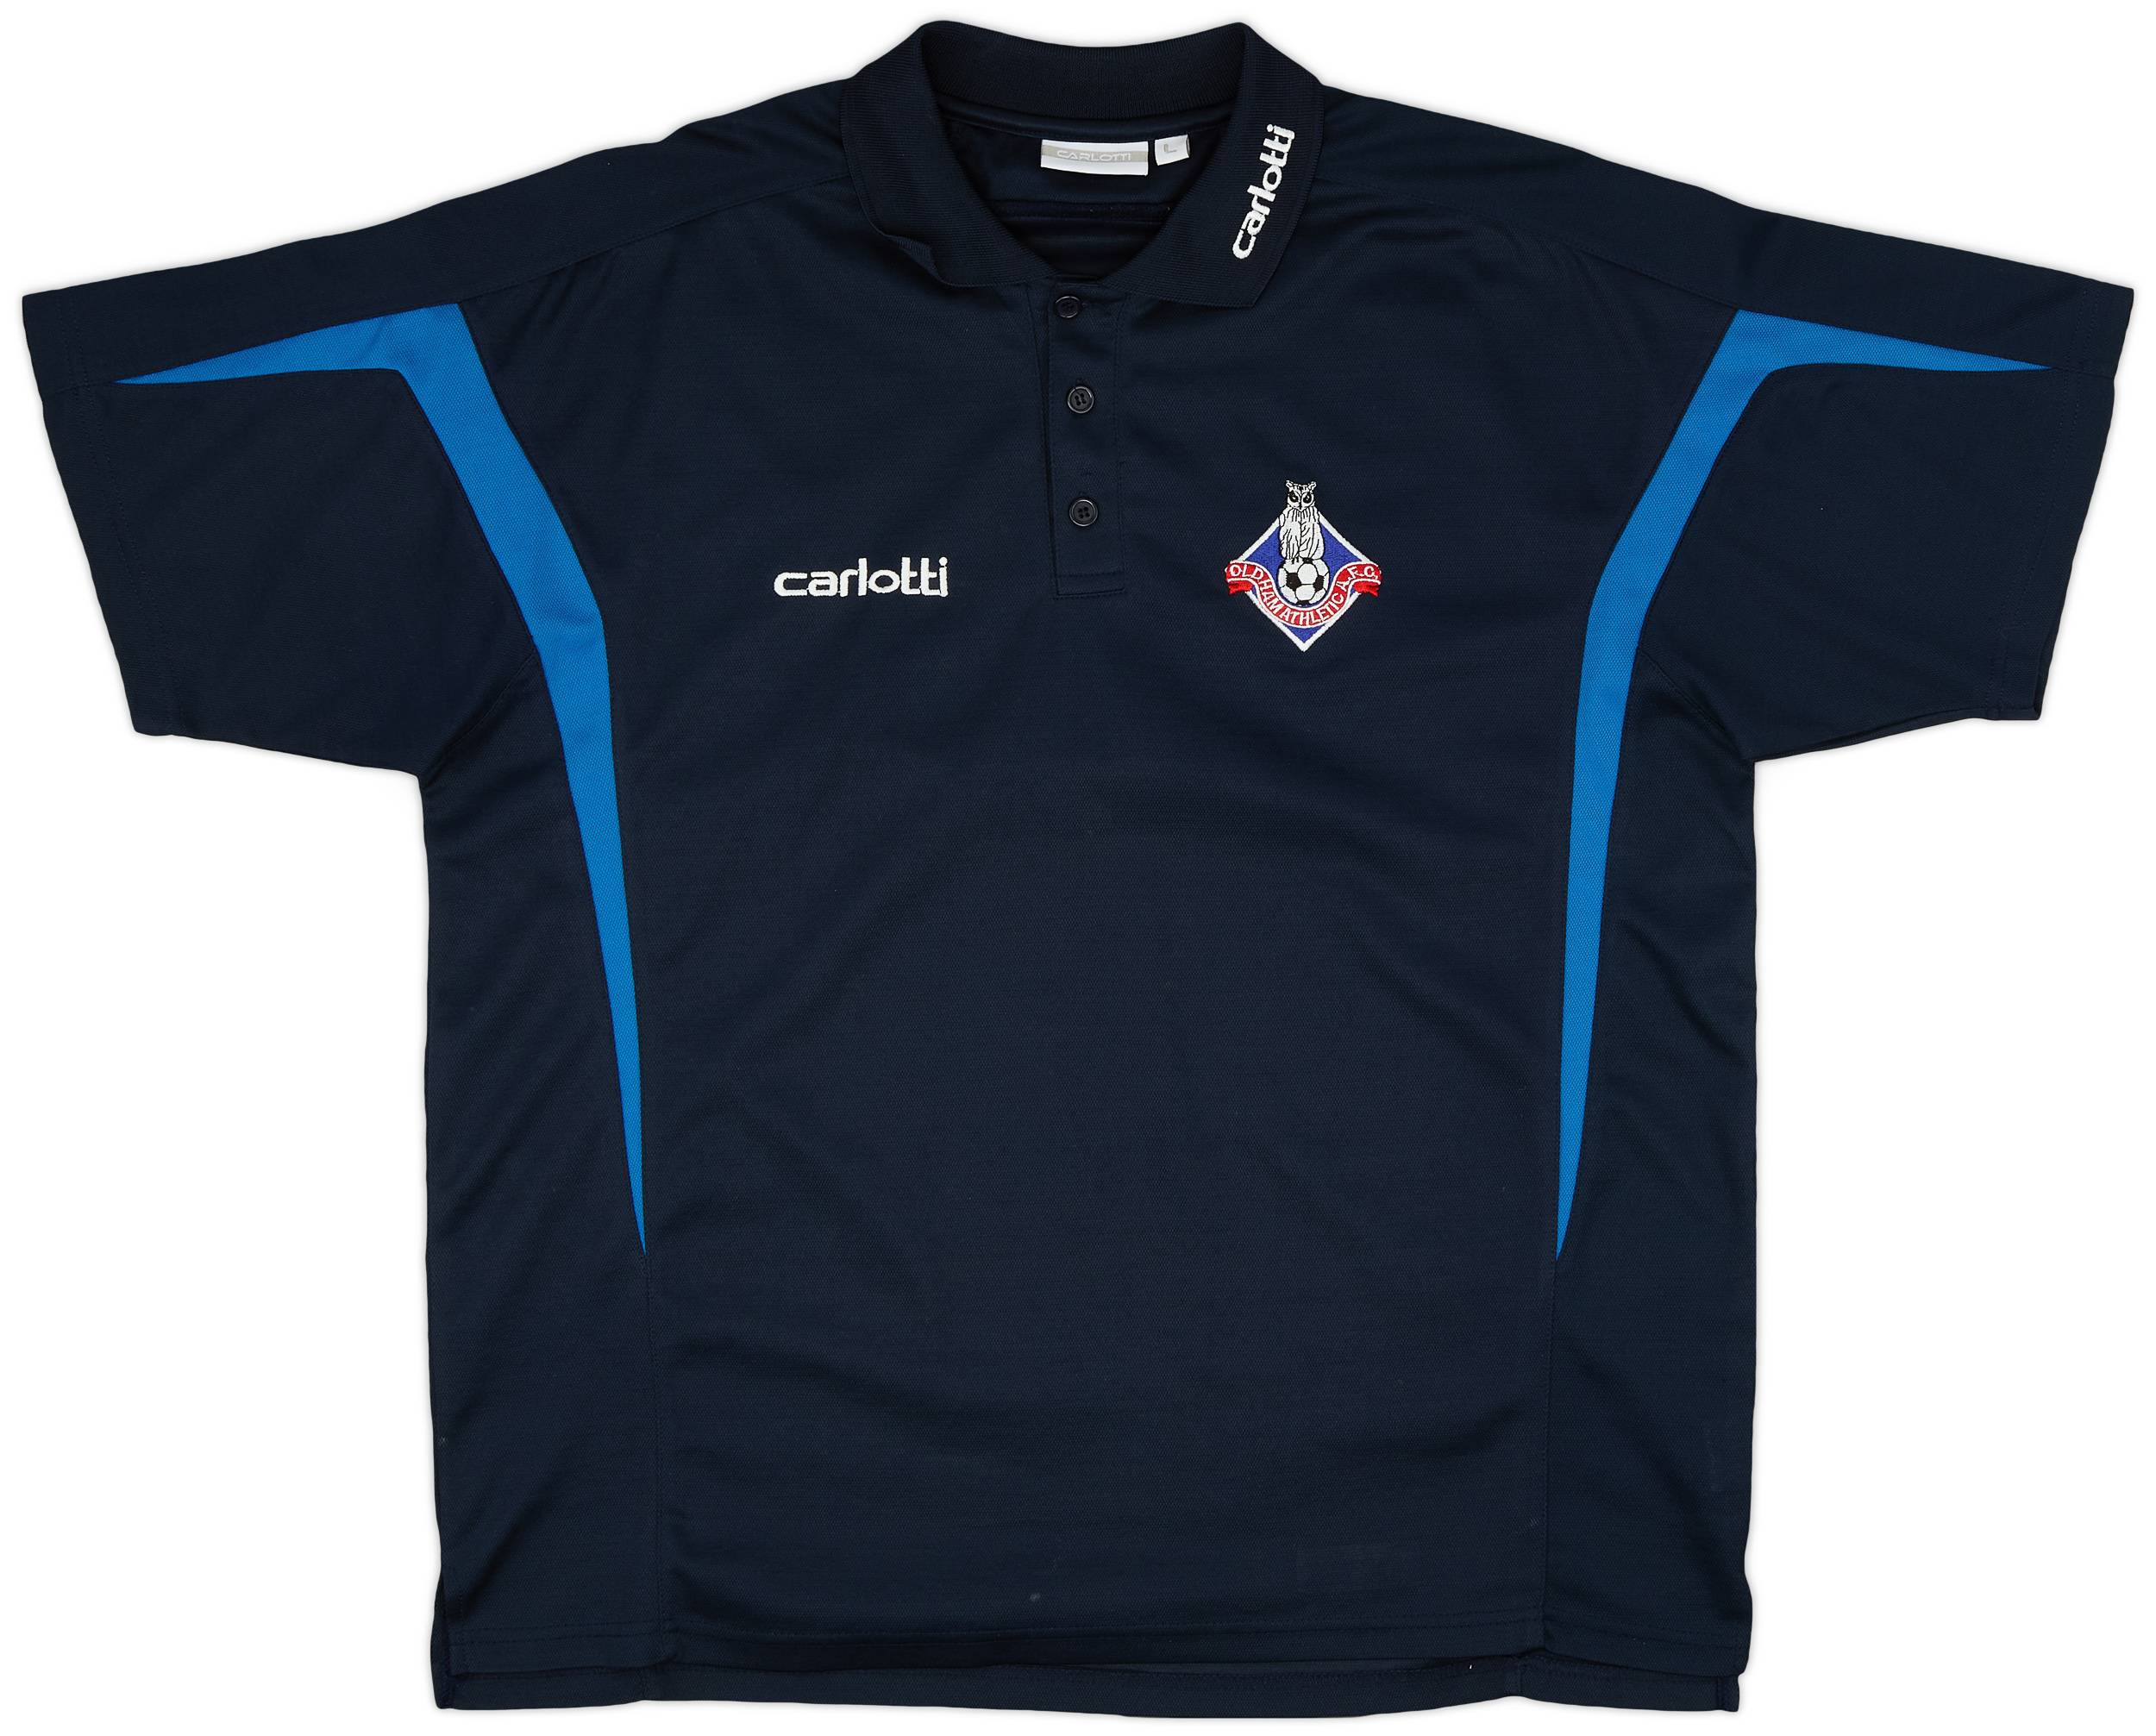 2004-05 Oldham Carlotti Polo Shirt - 8/10 - (L)